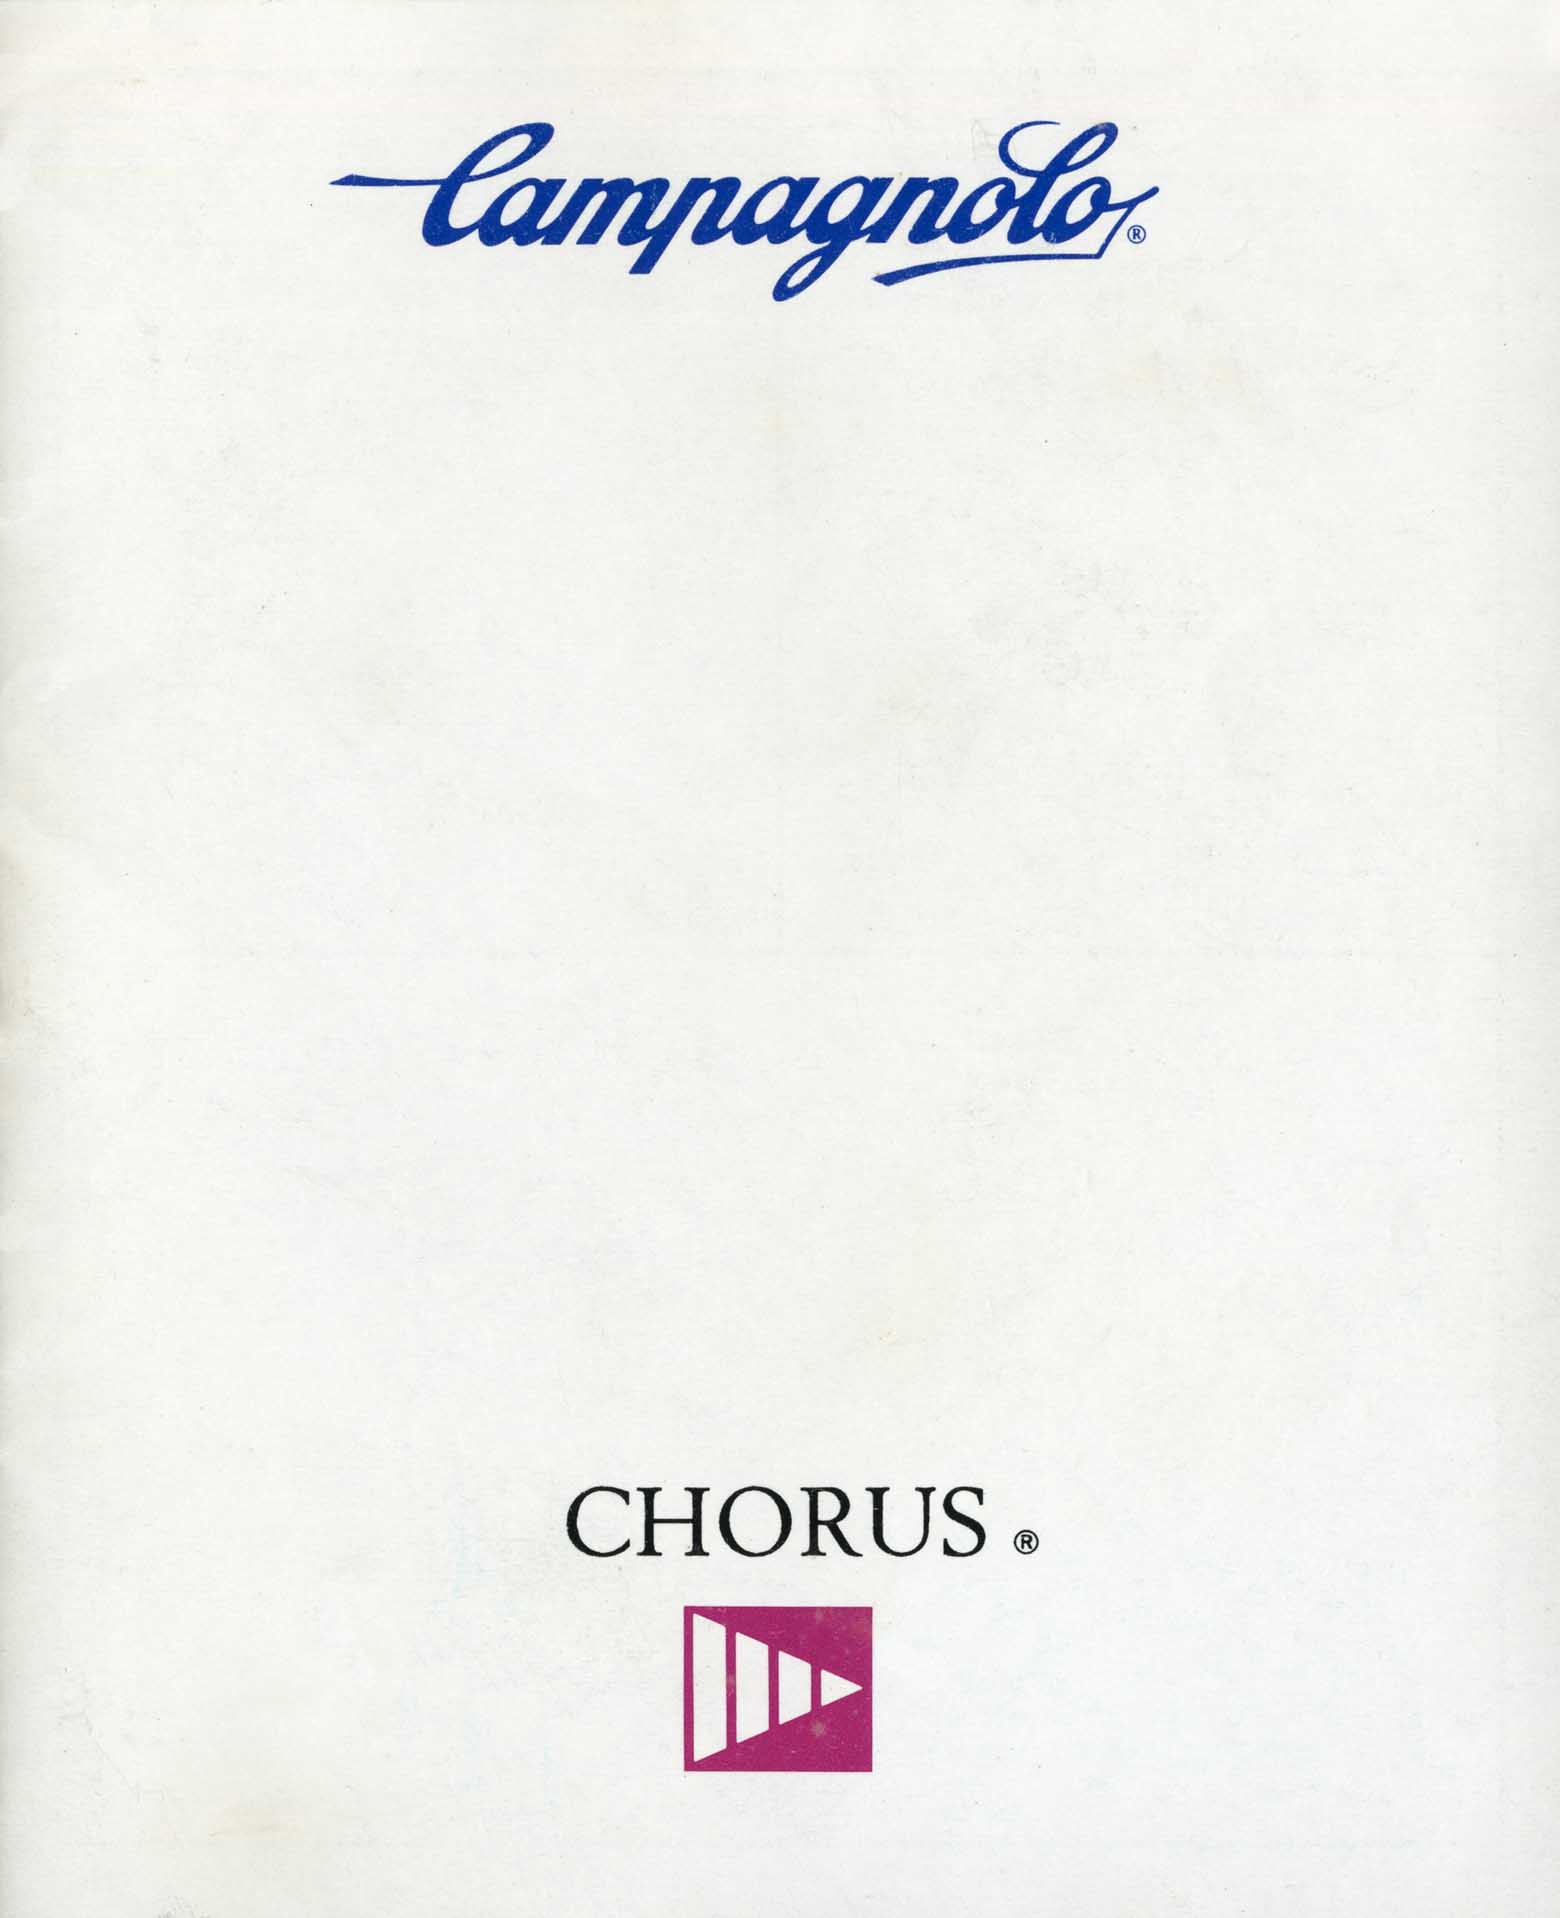 Campagnolo Chorus C010 instructions scan 01 main image